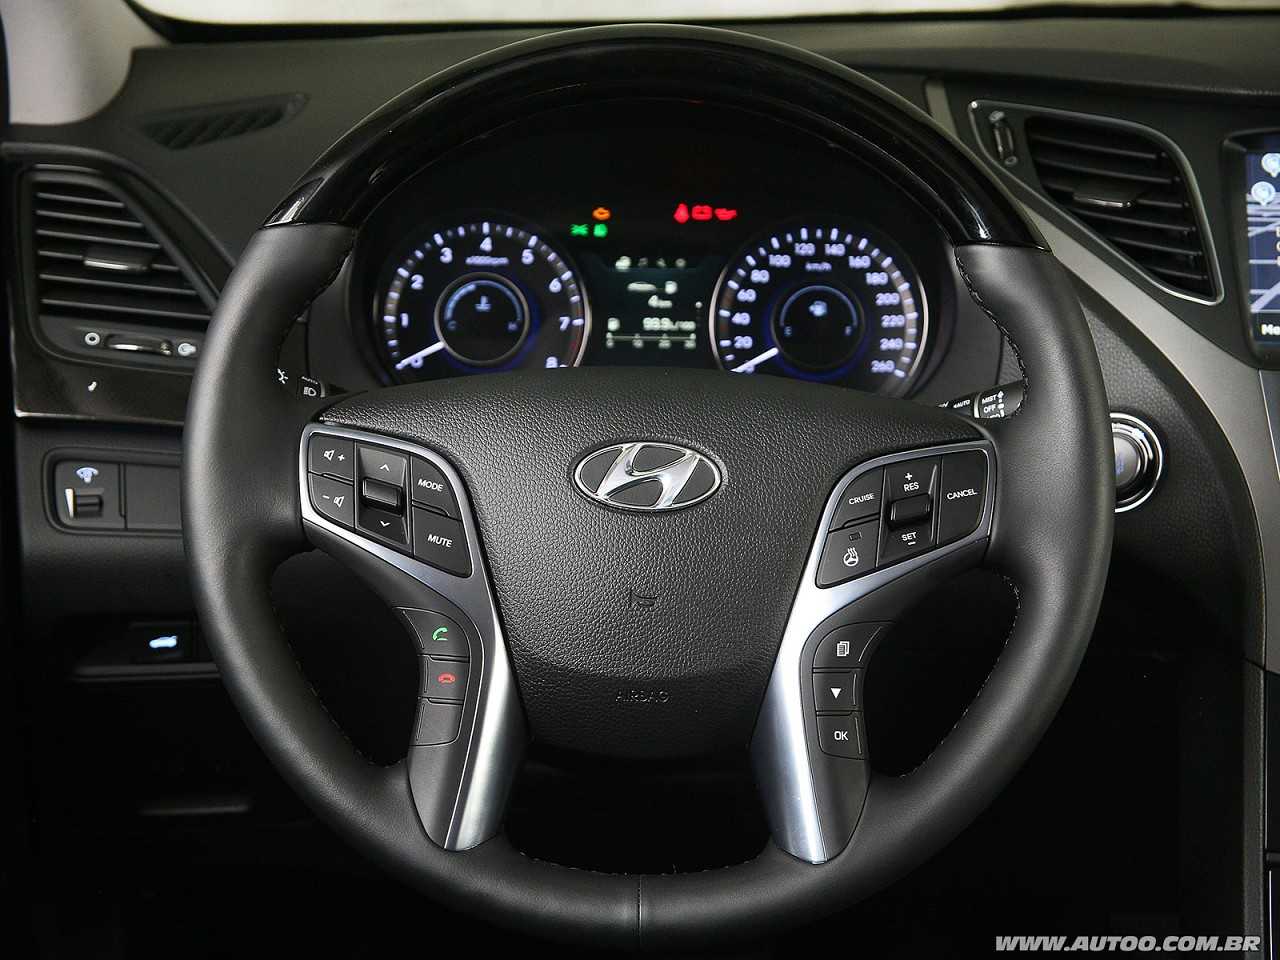 HyundaiAzera 2015 - volante